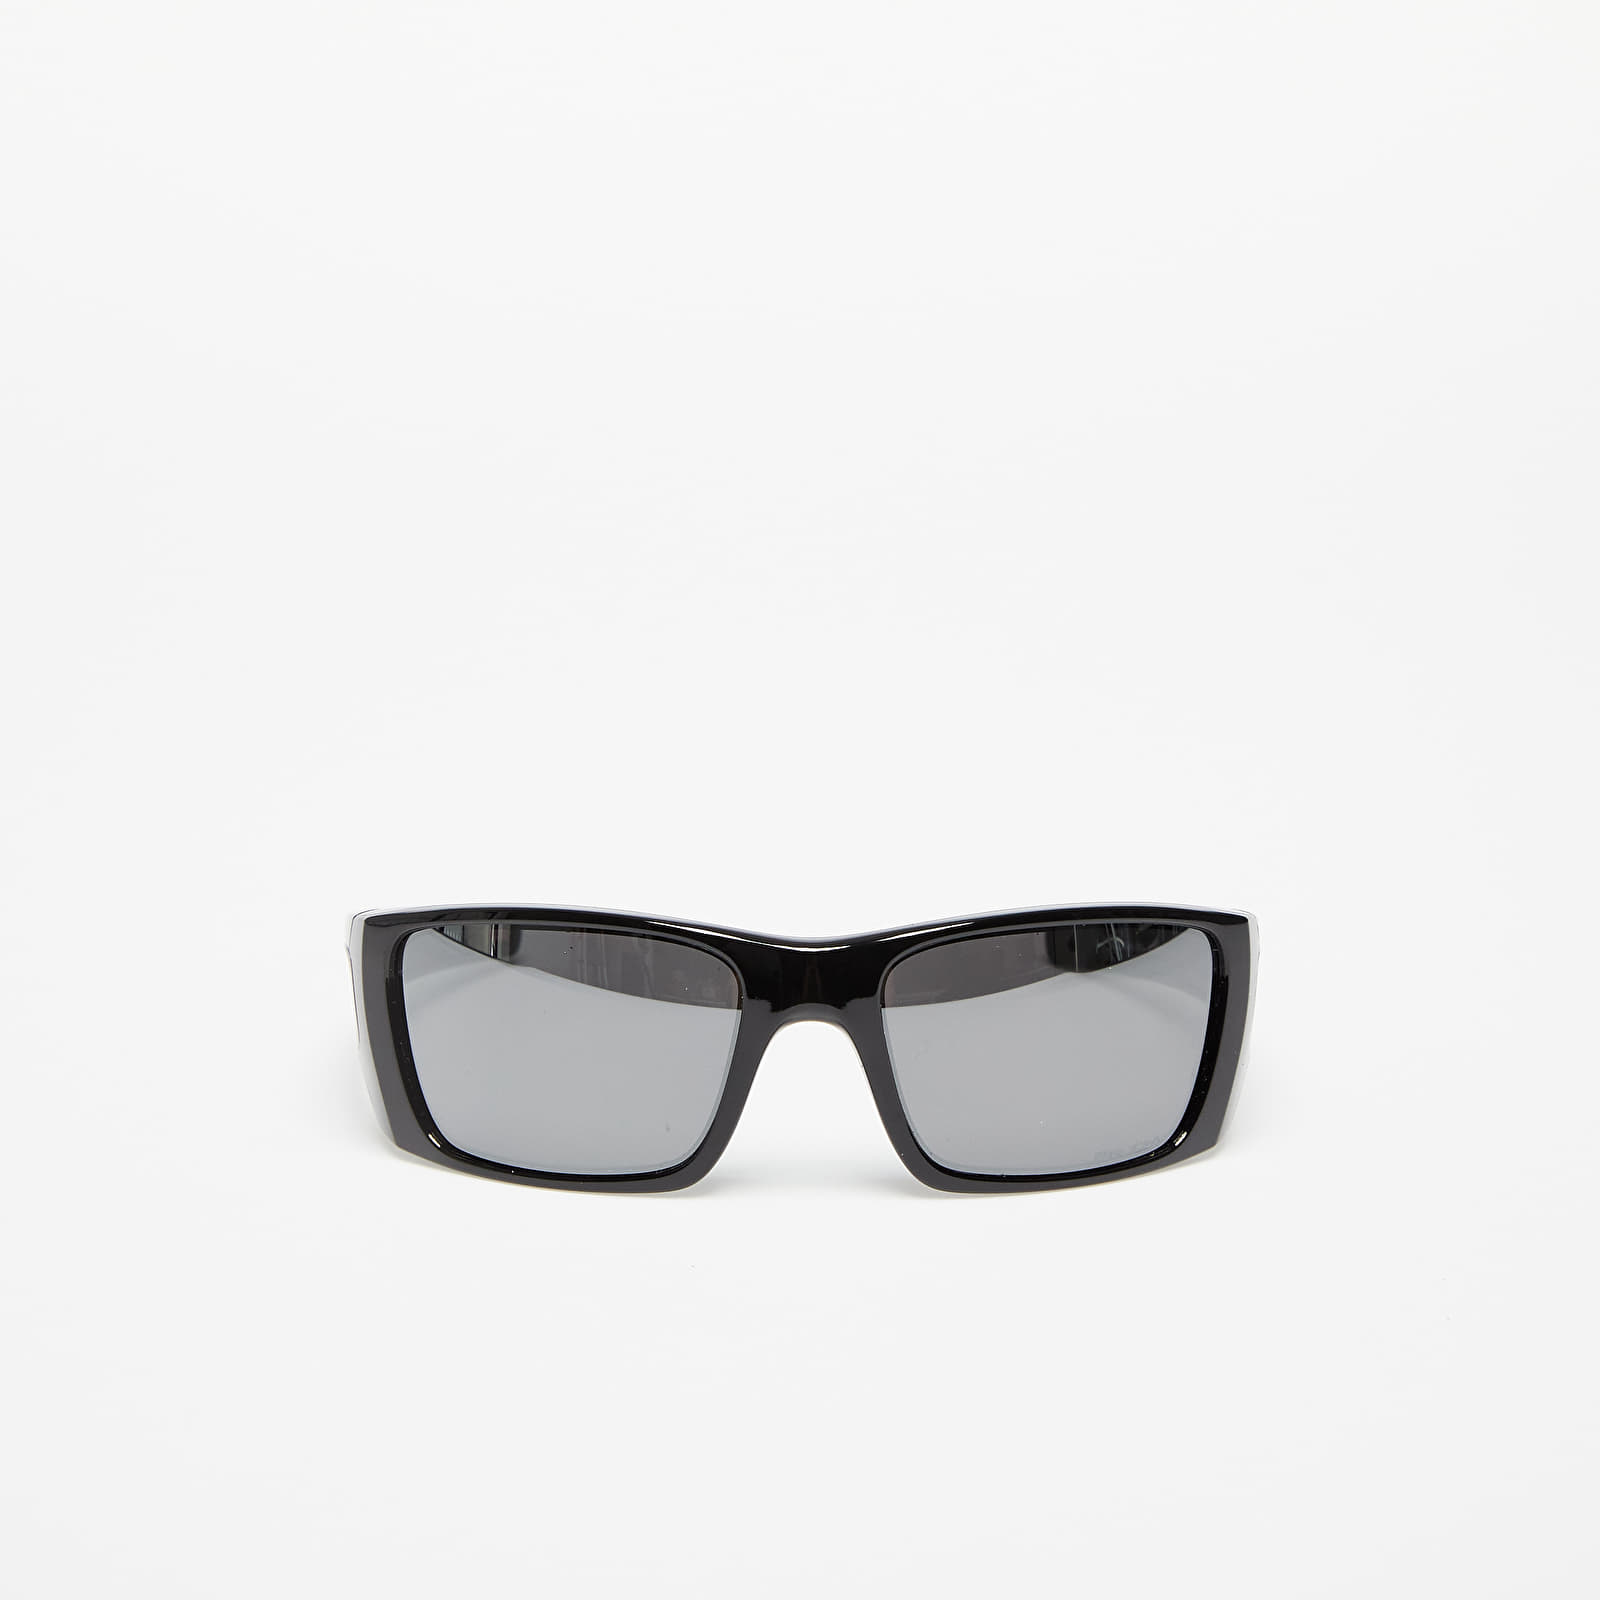 Sunglasses Oakley Fuel Cell Sunglasses Polished Black